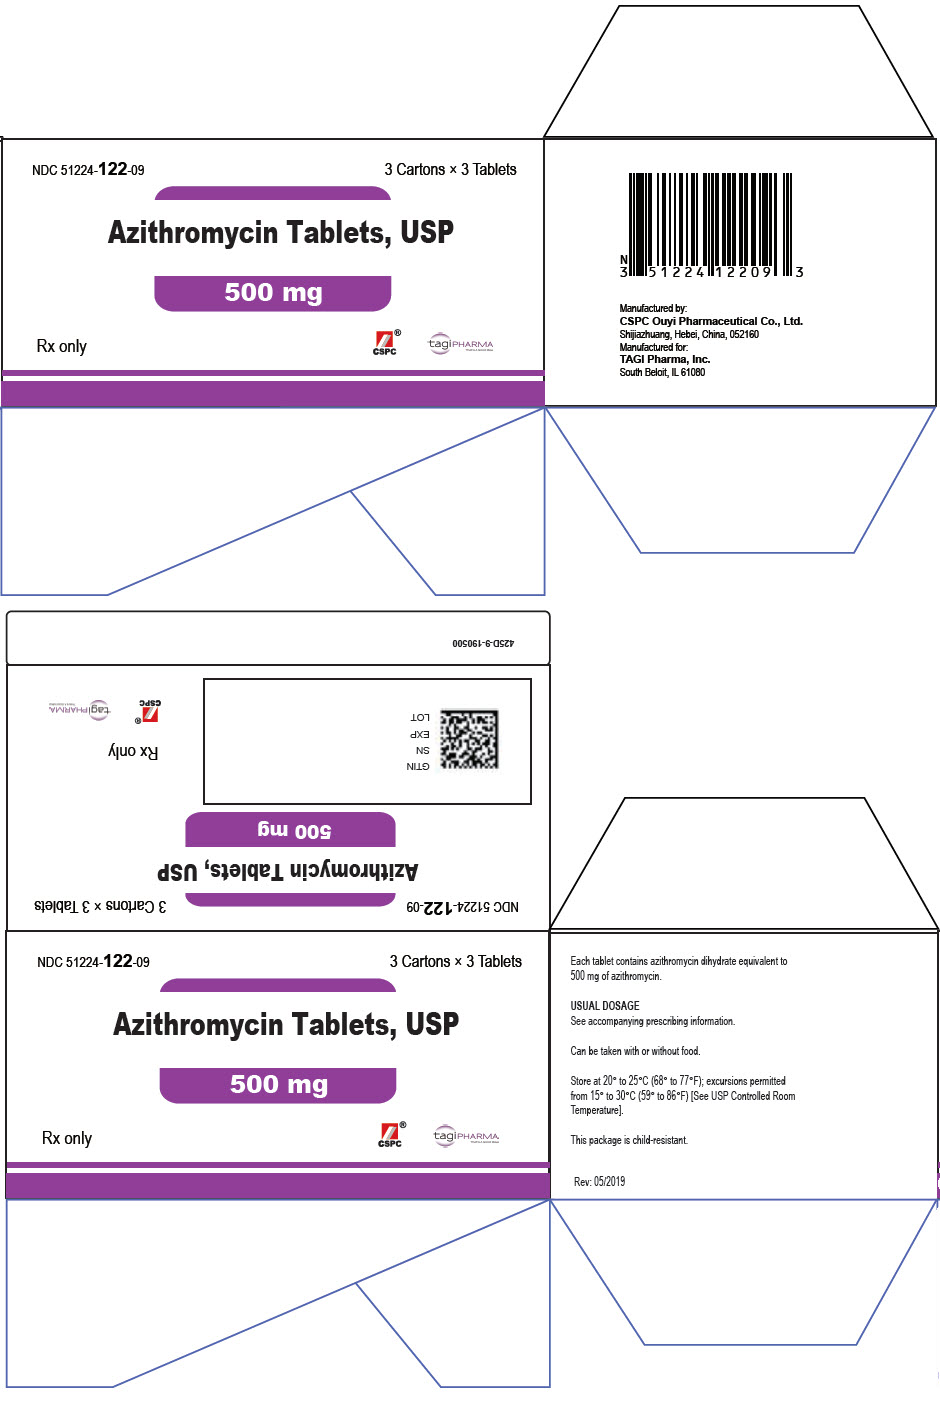 PRINCIPAL DISPLAY PANEL - 500 mg Tablet Blister Pack Carton Box